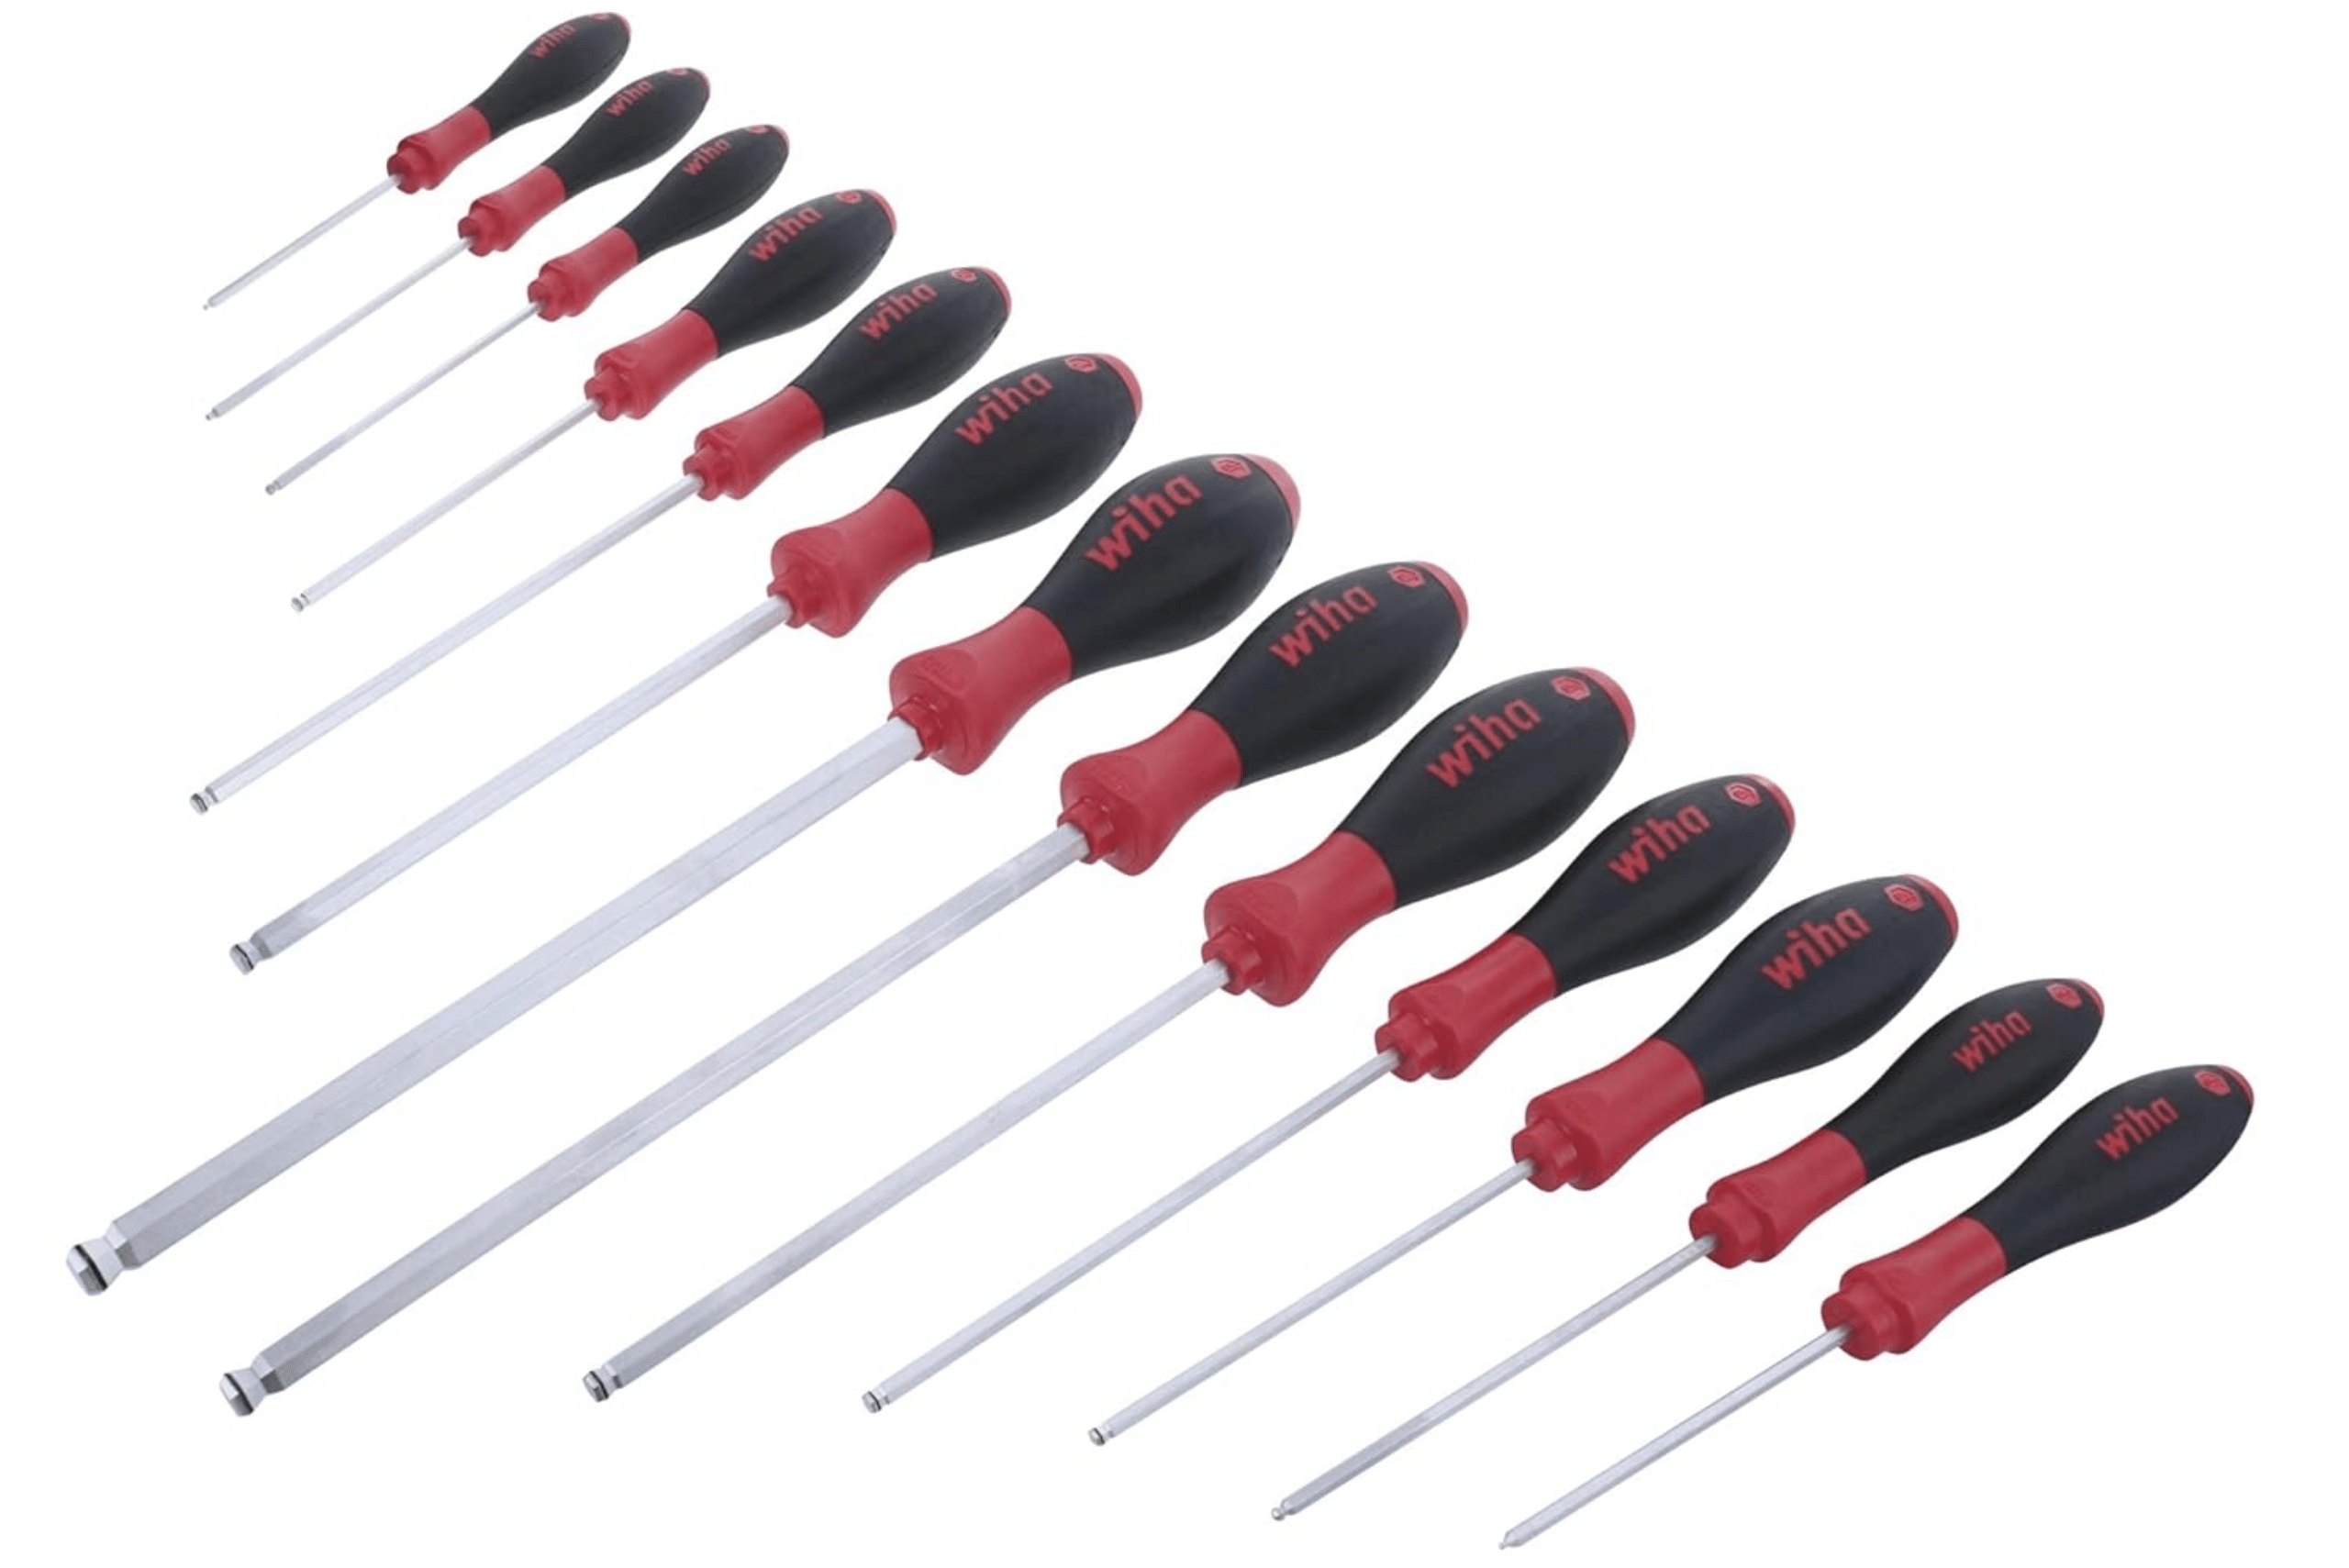 A set of hex screwdrivers.